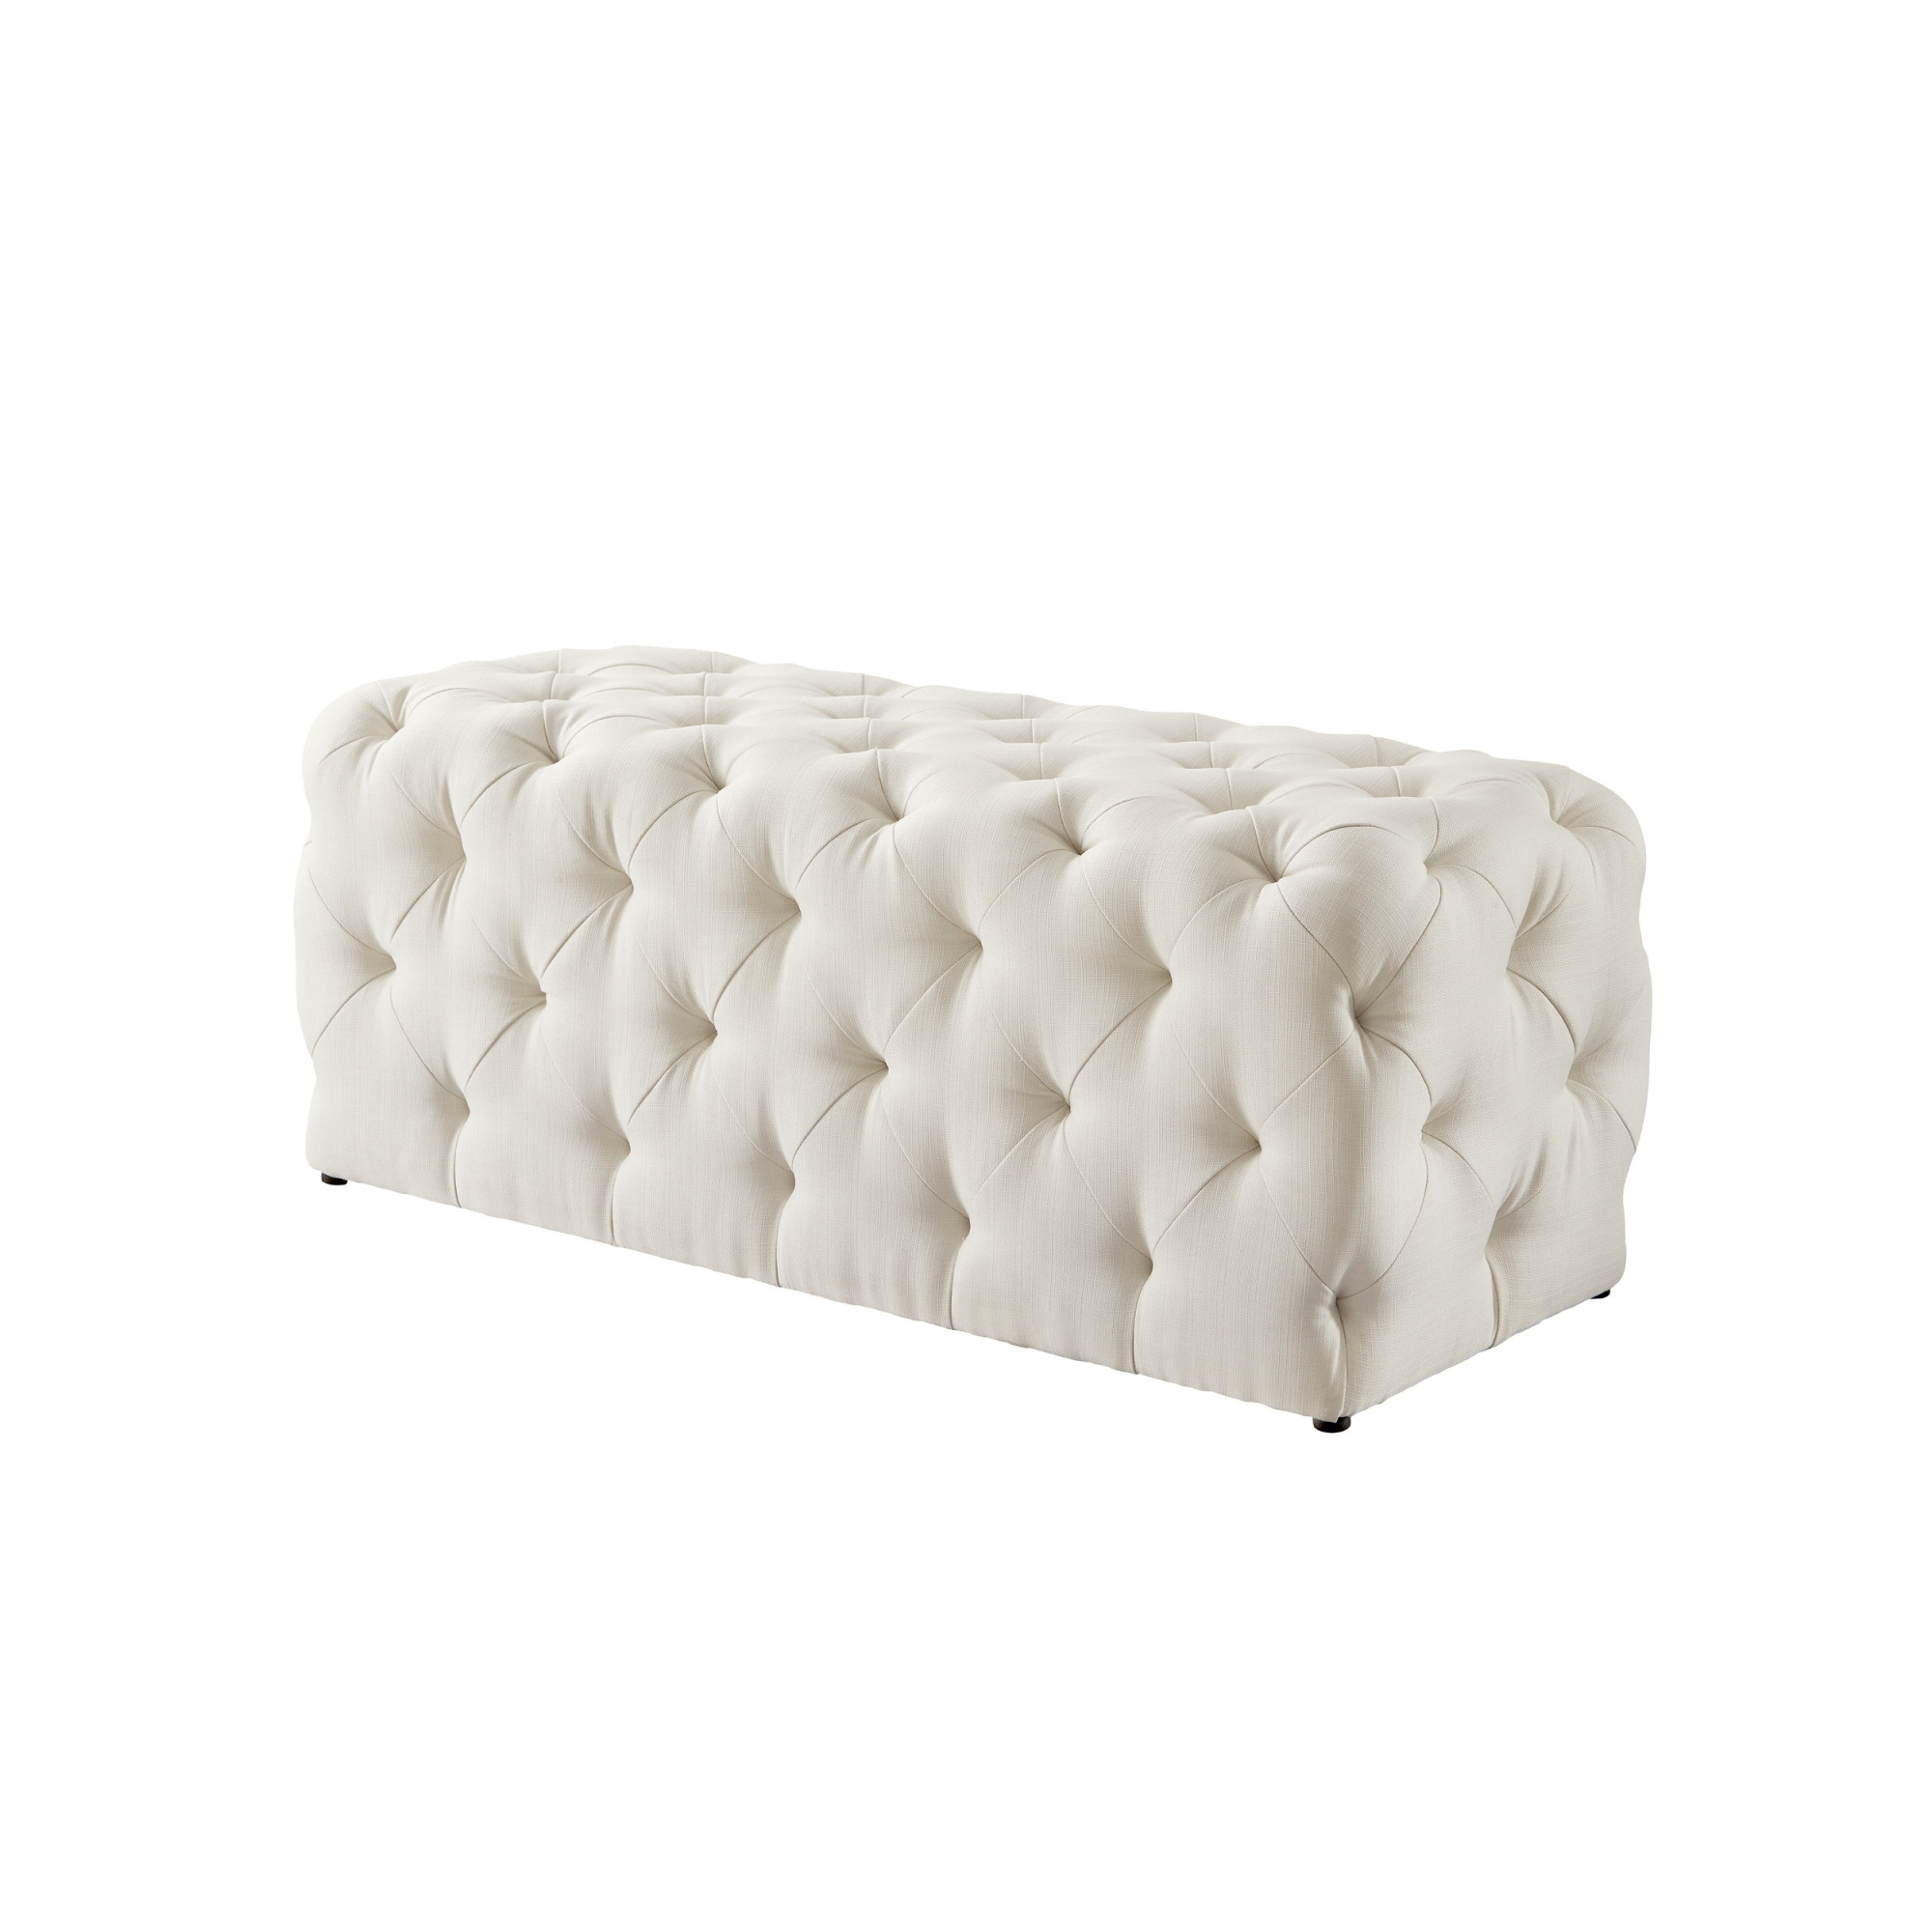 48" Cream And Black Upholstered Linen Bench-490942-1